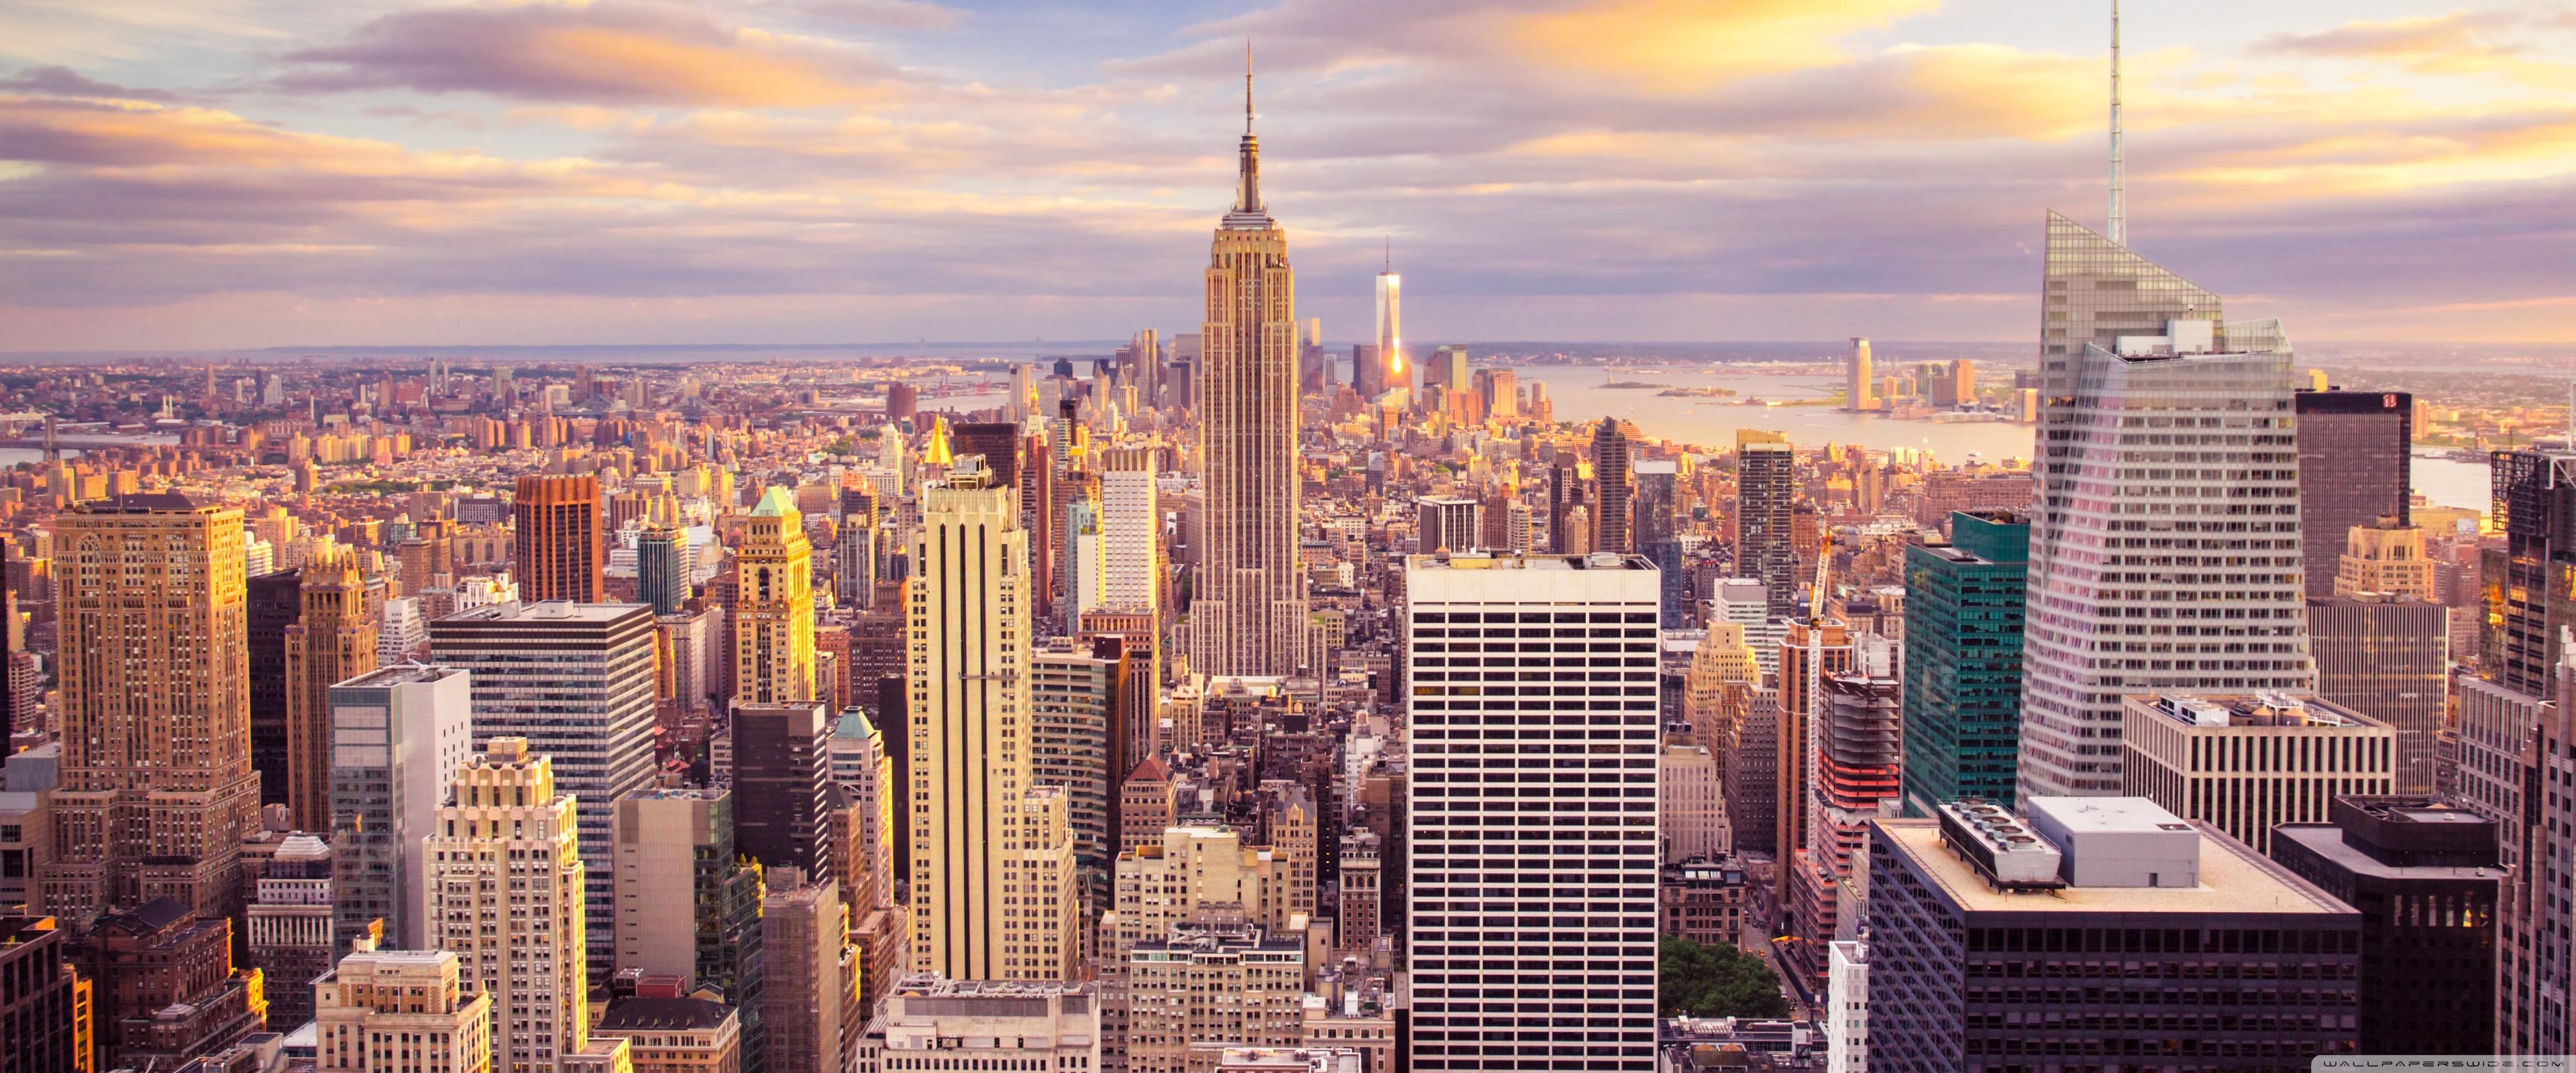 New York City Buildings 4k HD Desktop Wallpaper For